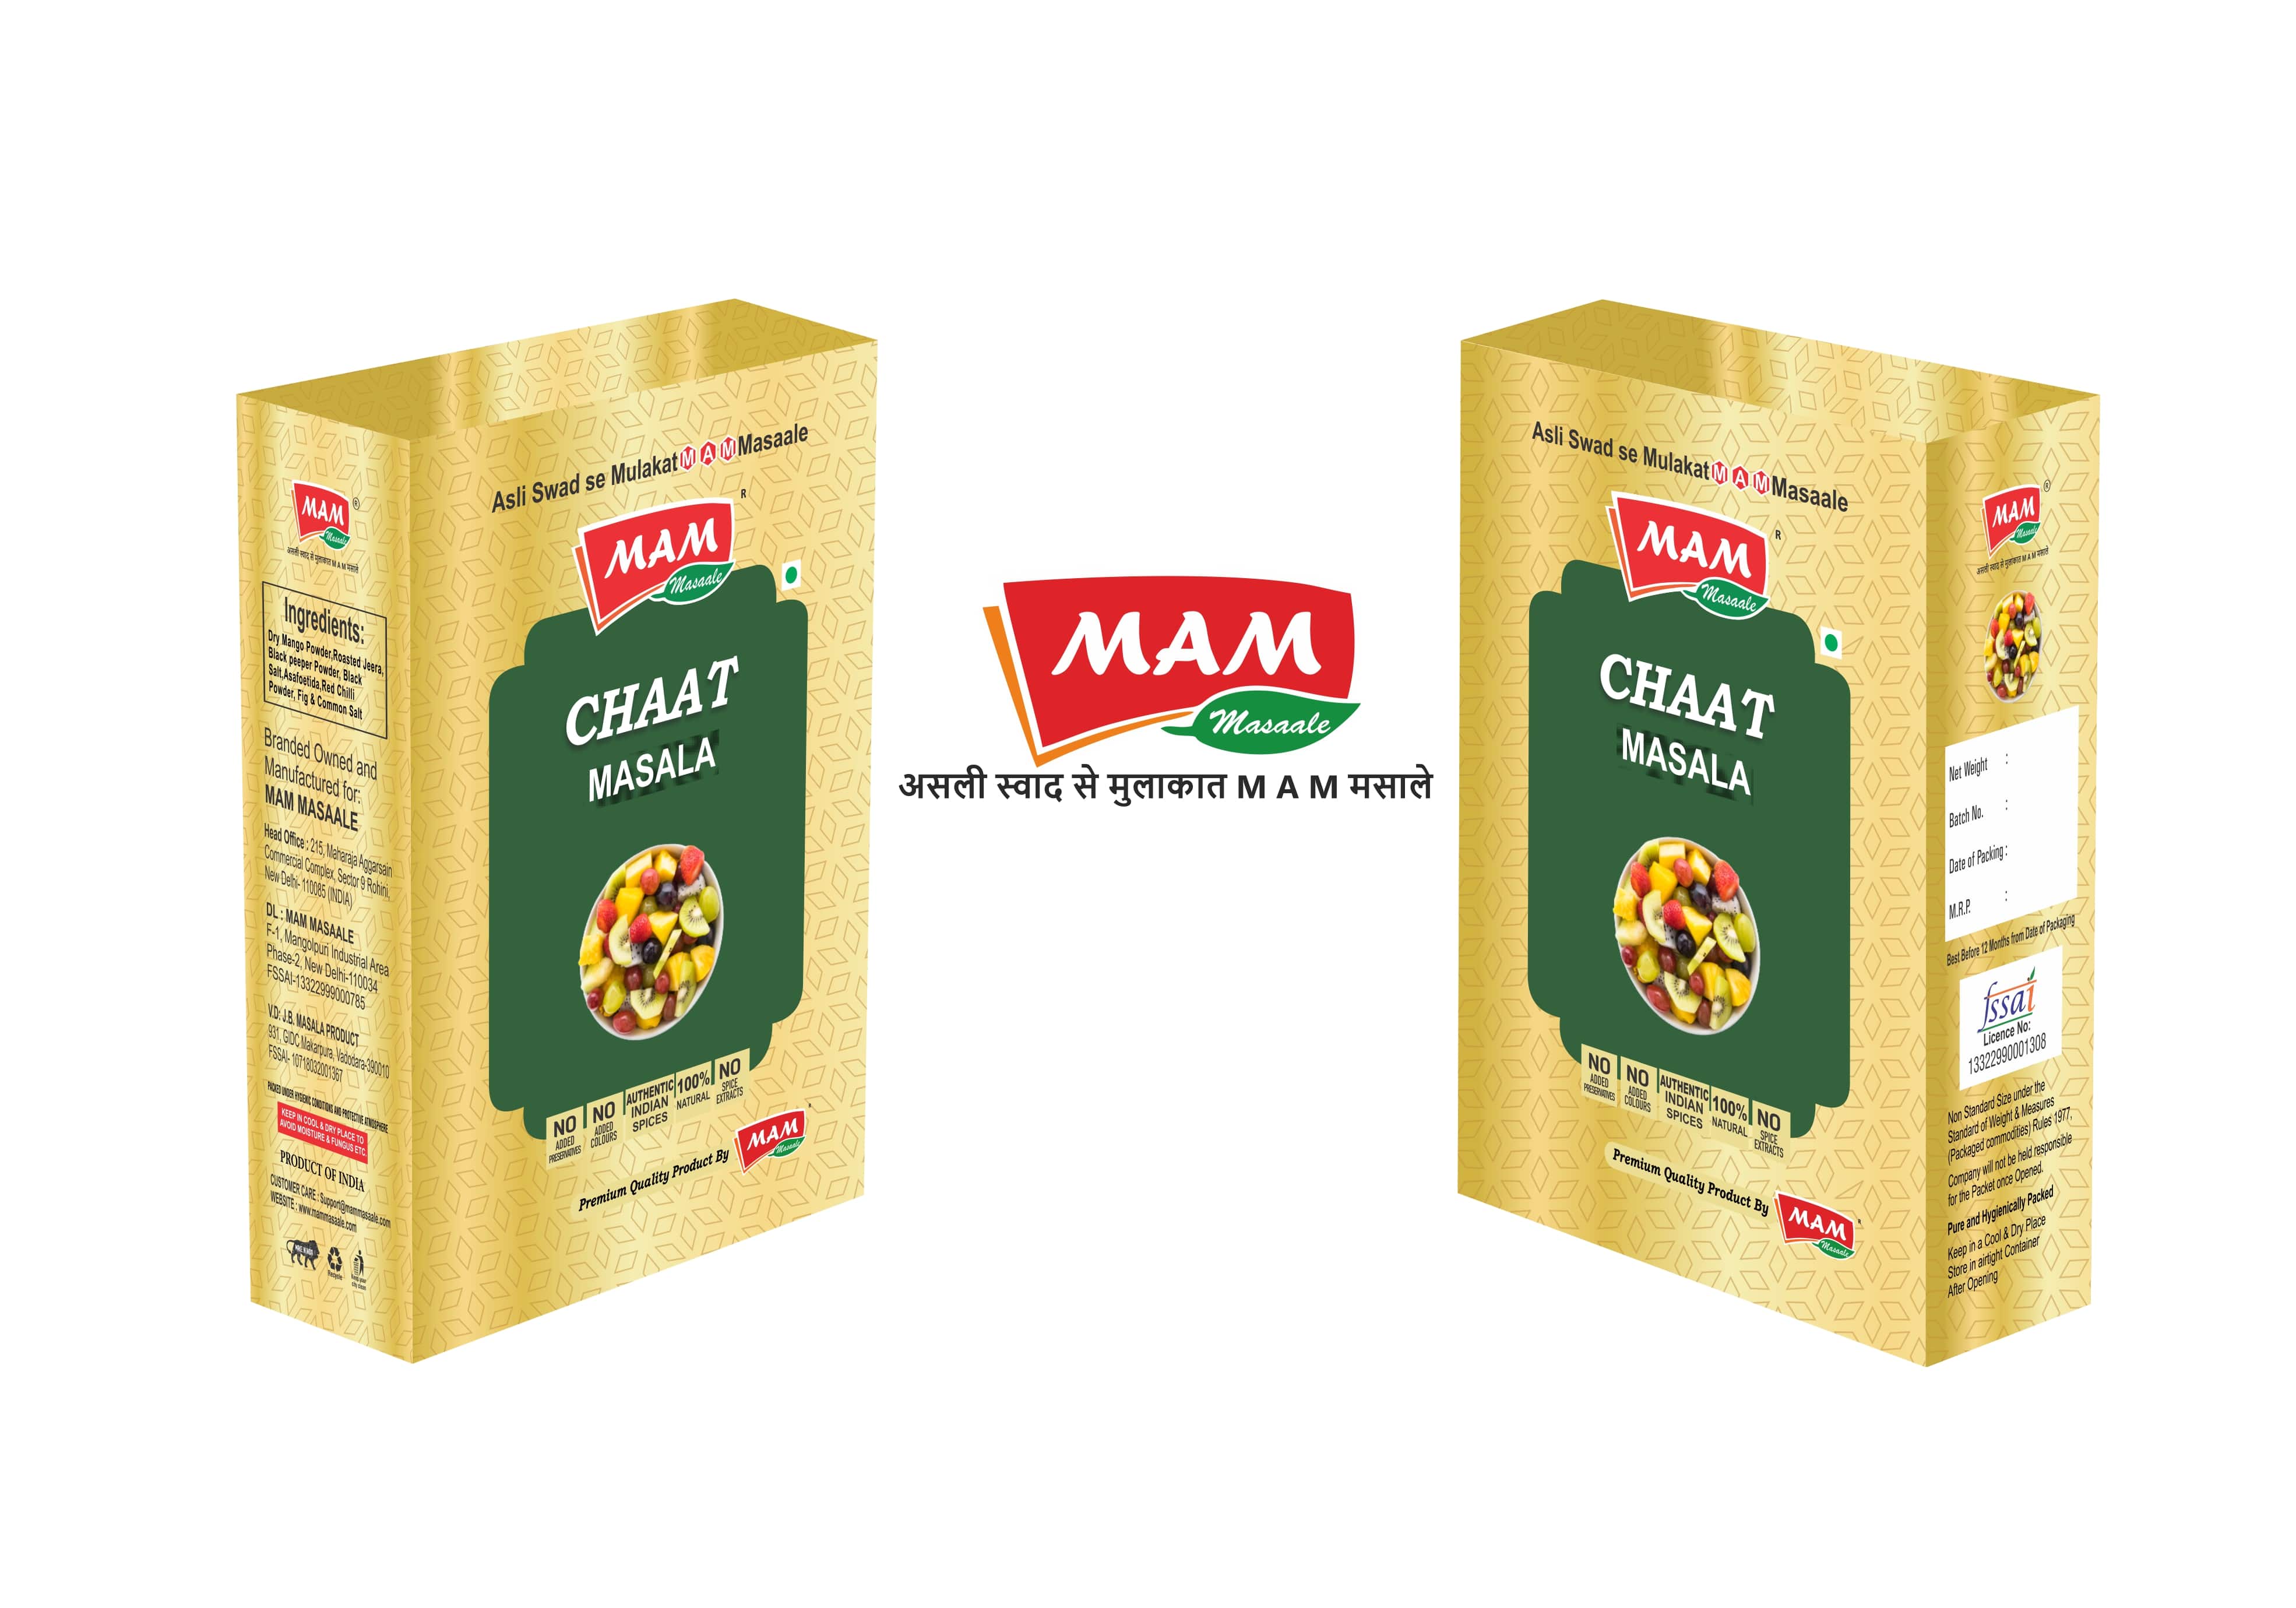 Chaat Masala | Masala Companies | Spice India - Mammasaale